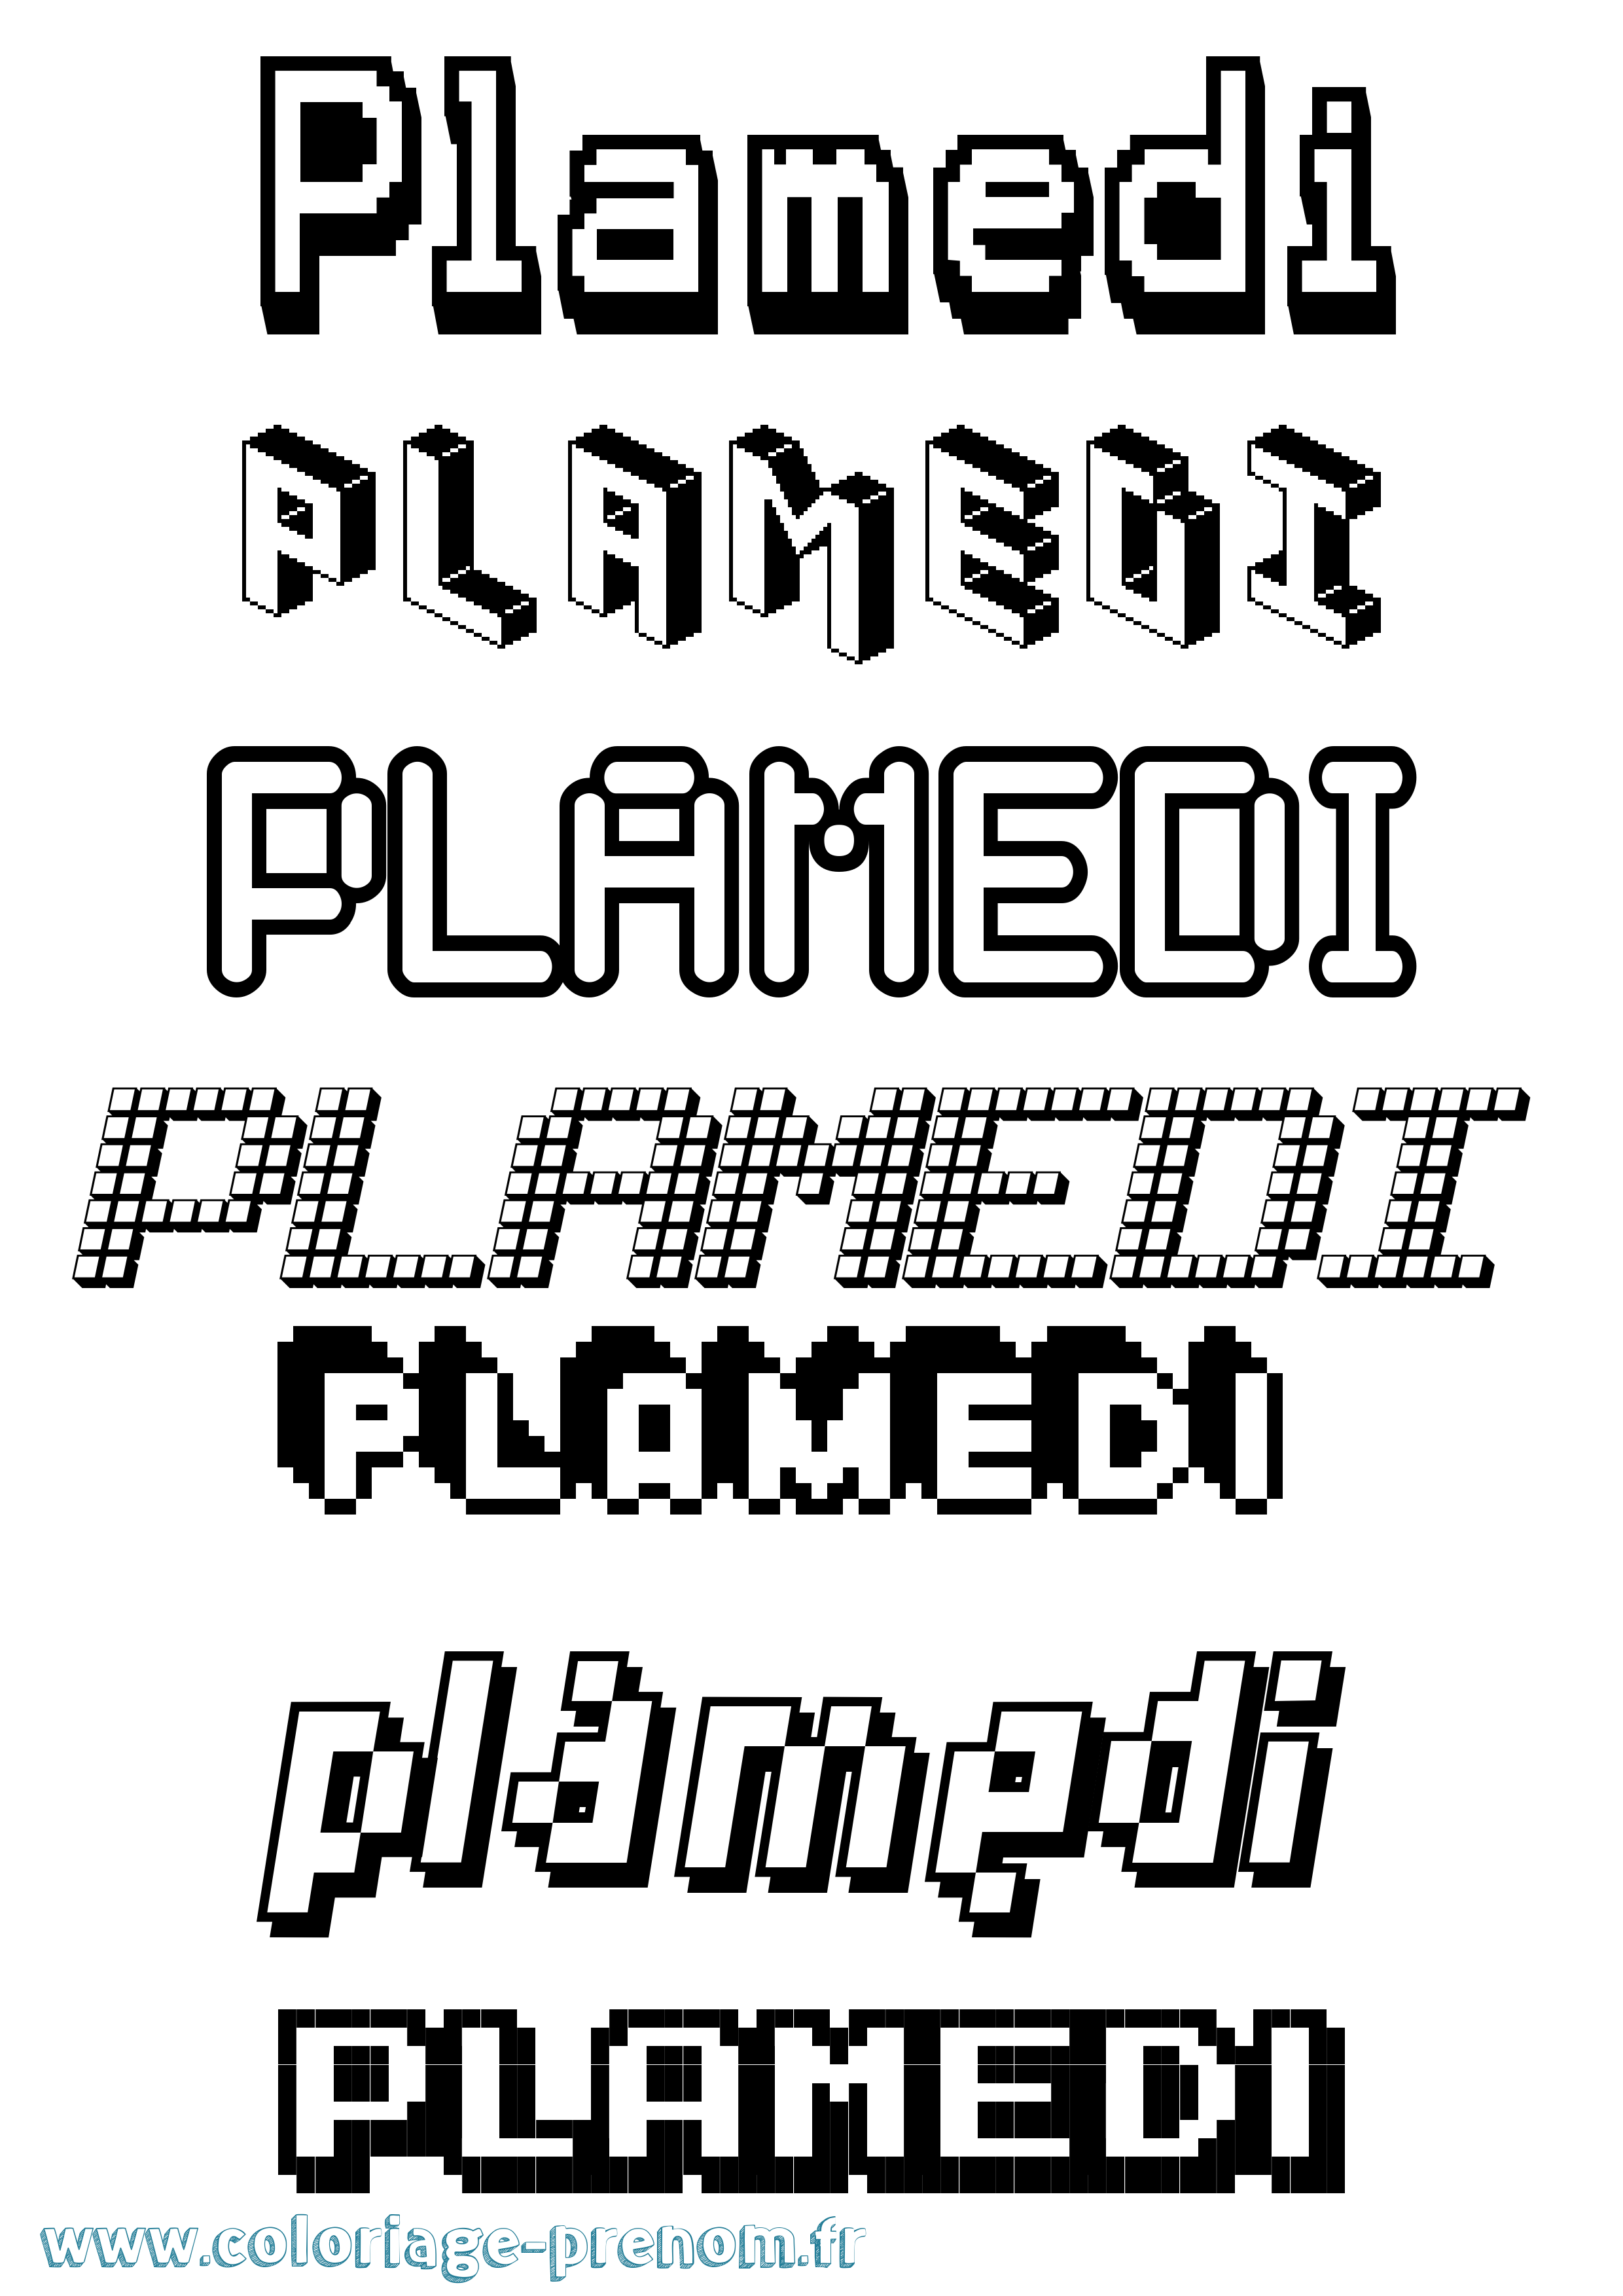 Coloriage prénom Plamedi Pixel